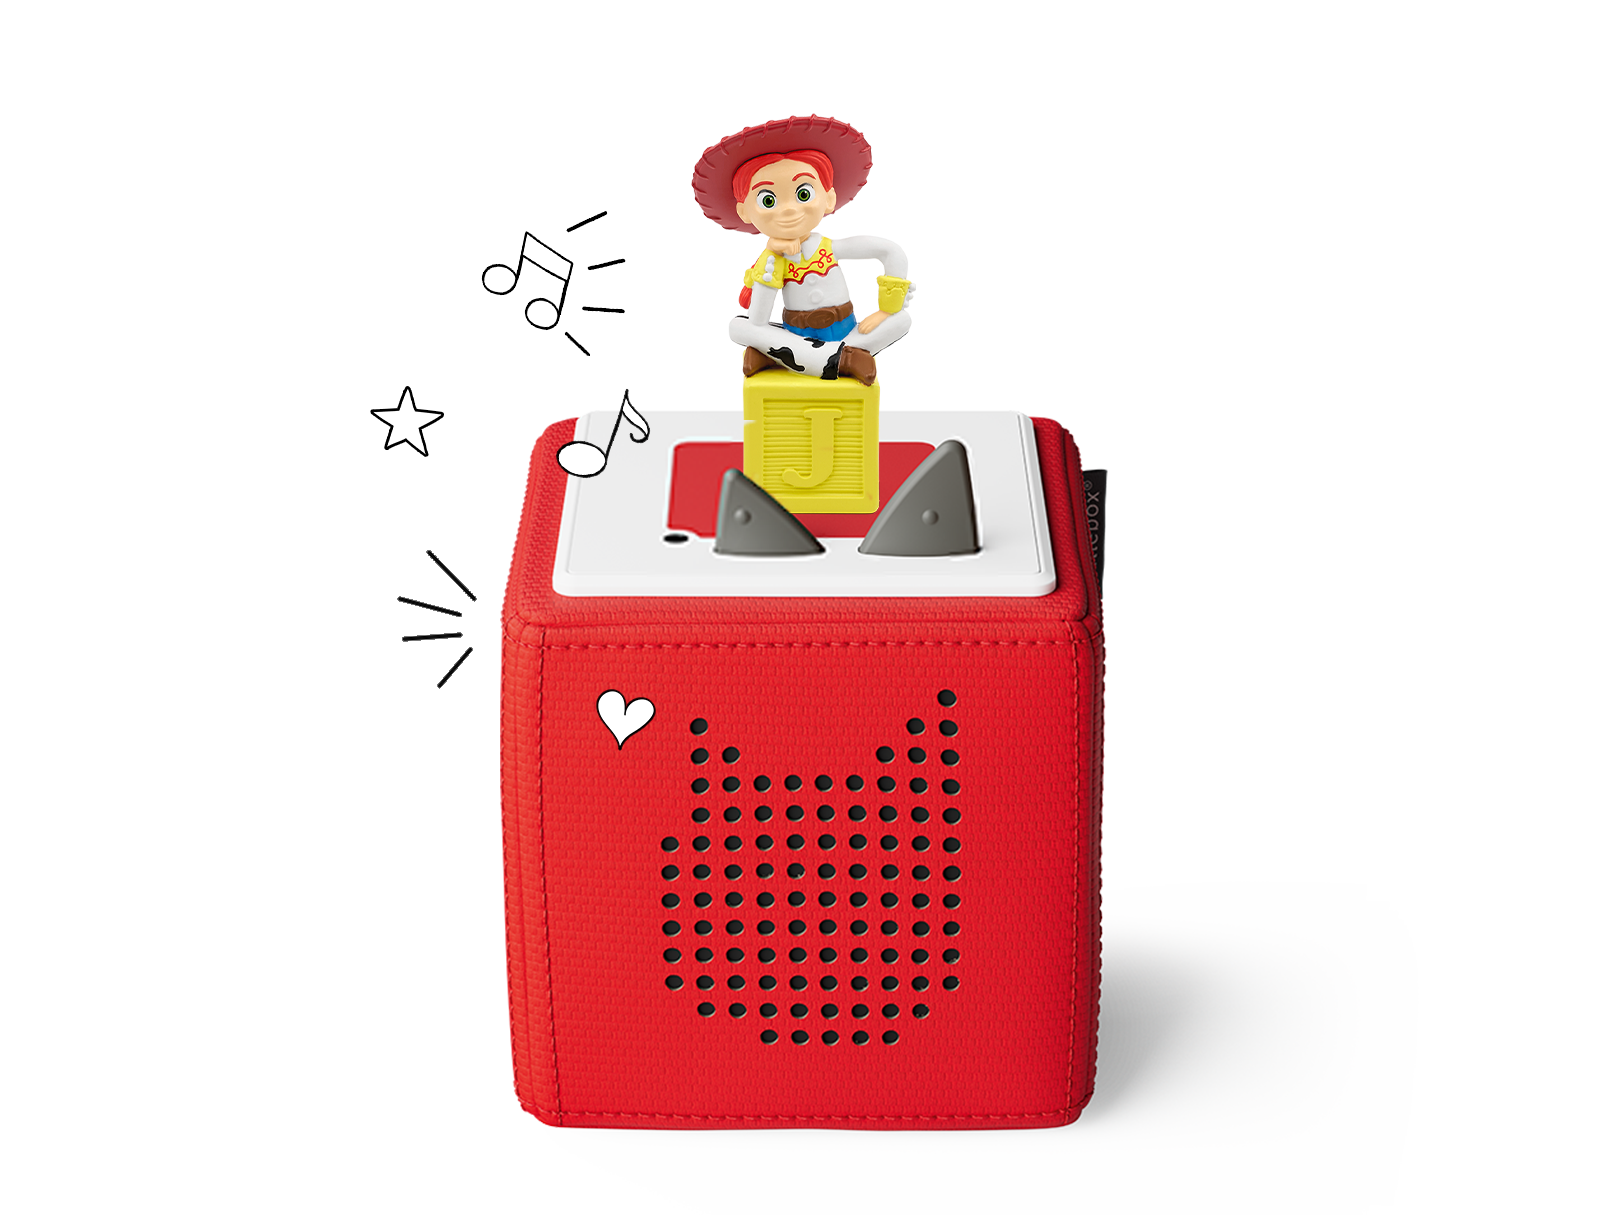 How it works - Toy Story Jessie on a red toniebox